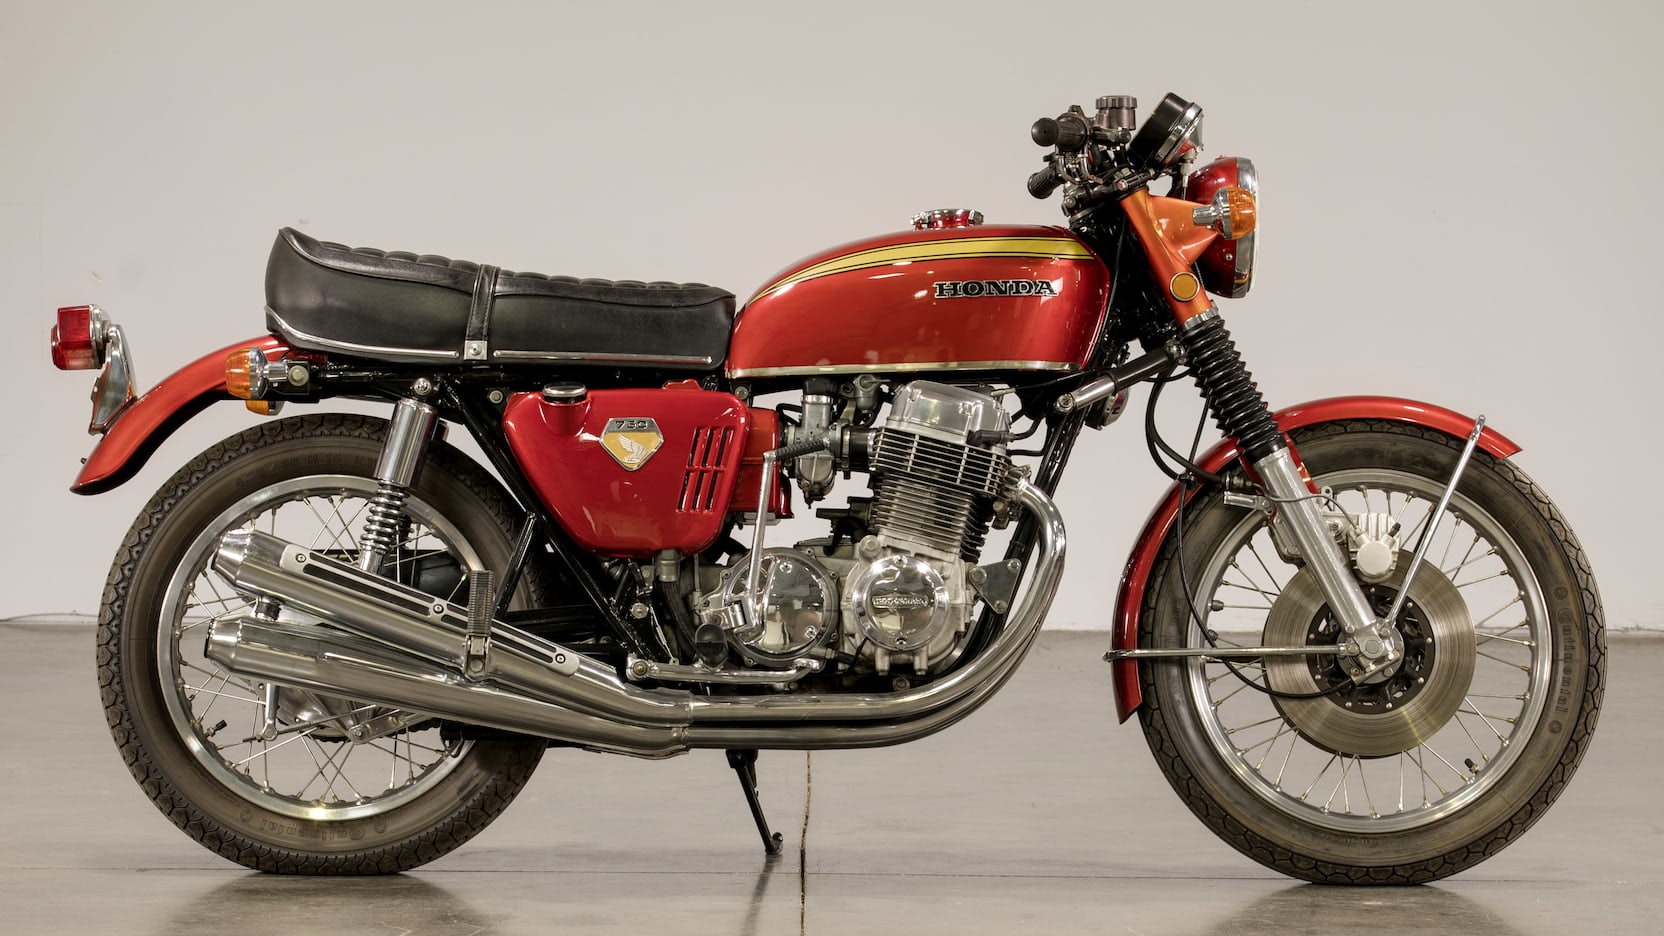 A Rare 1969 Honda CB750 Sandcast  The Worlds First Superbike